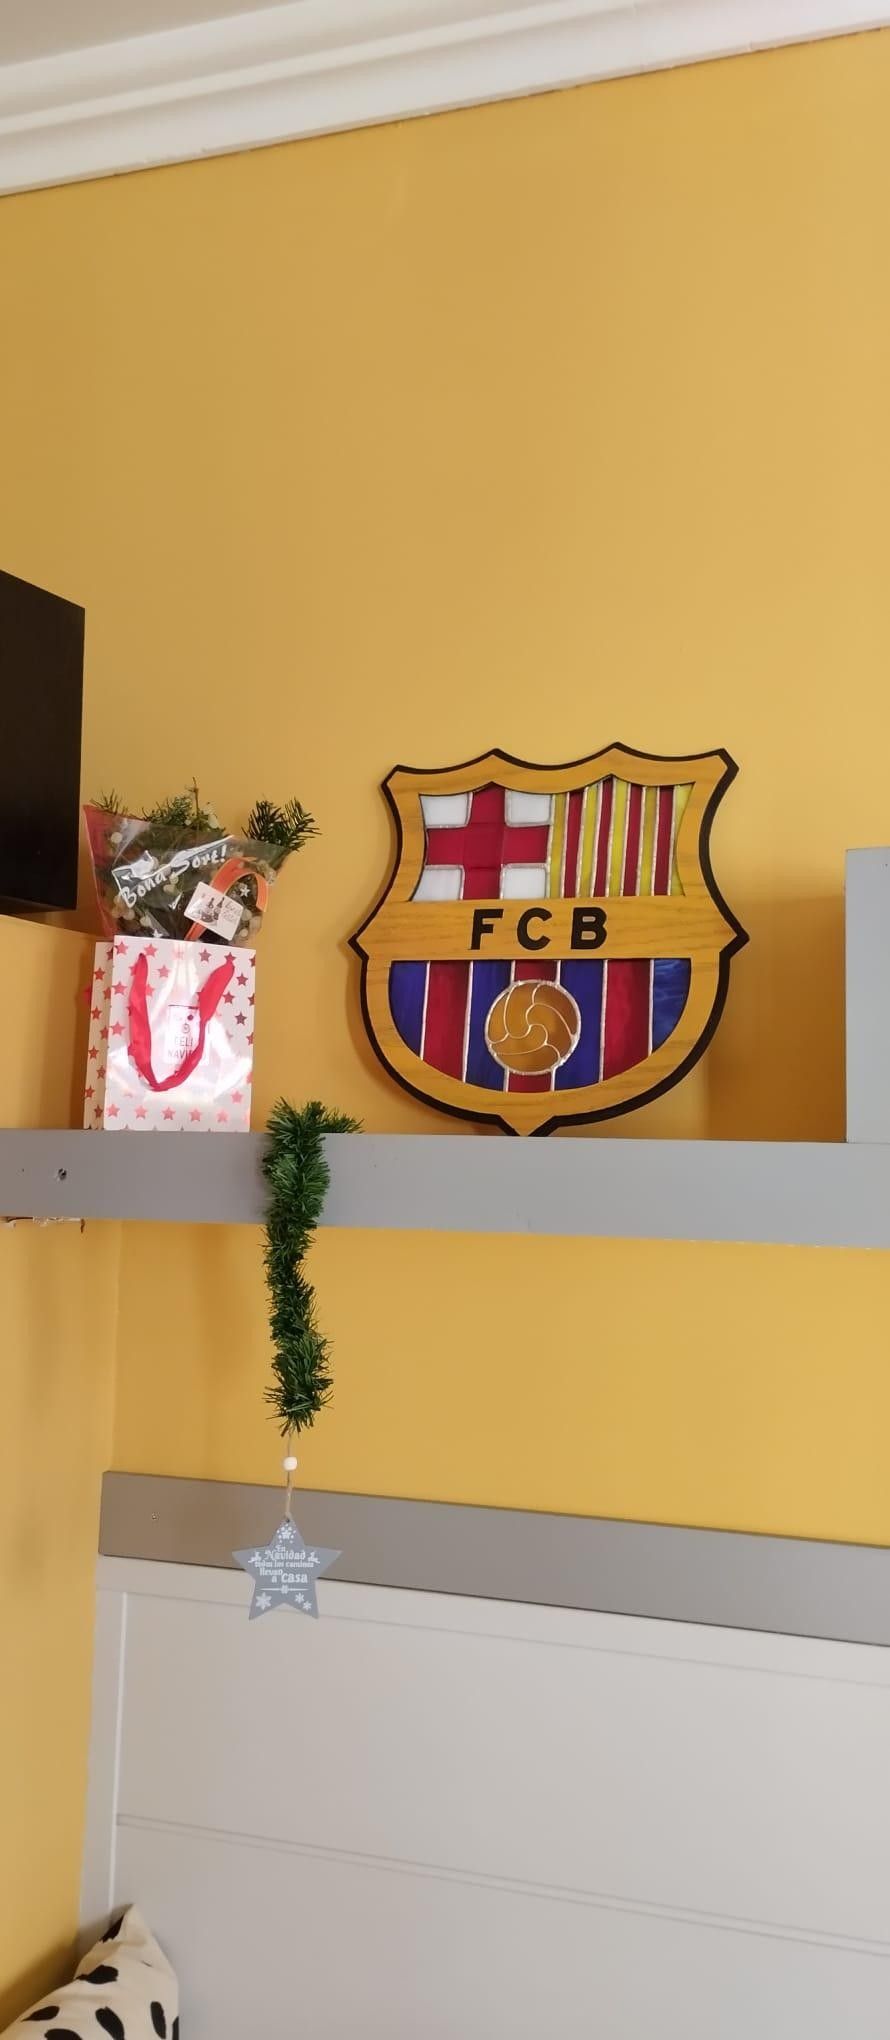 FC Barcelona merkki